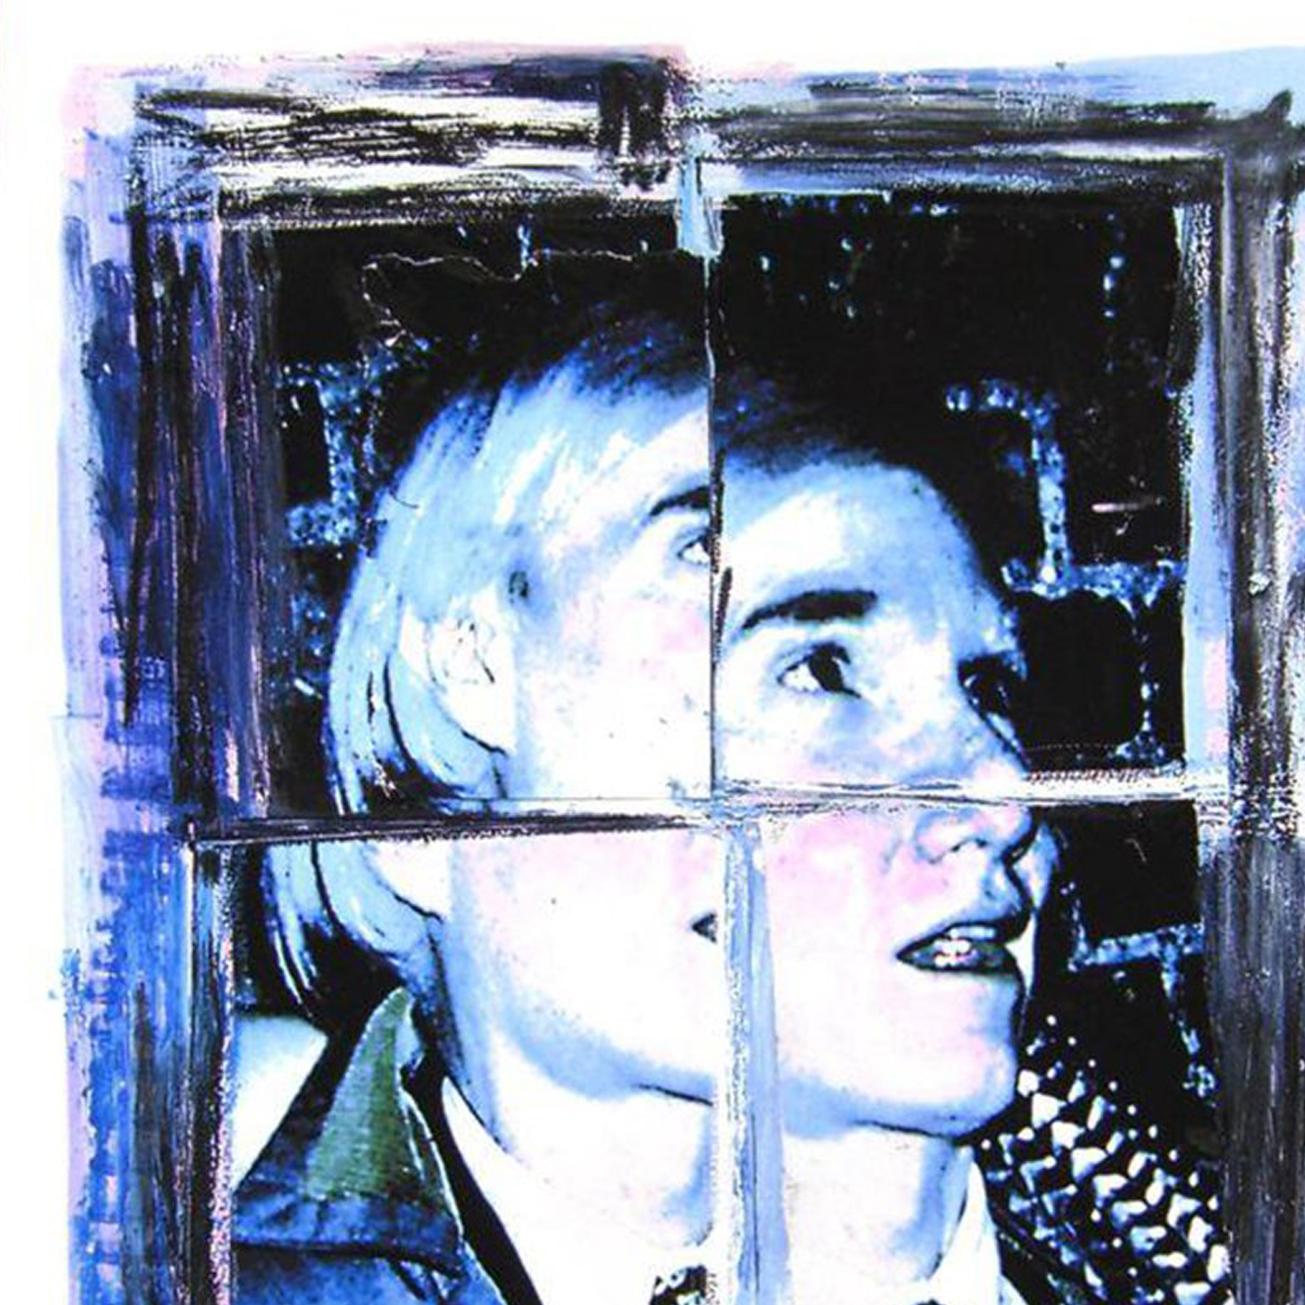 Andy Warhol, Palladium NYC, 1979 - Contemporary Mixed Media Art by Steve Joester